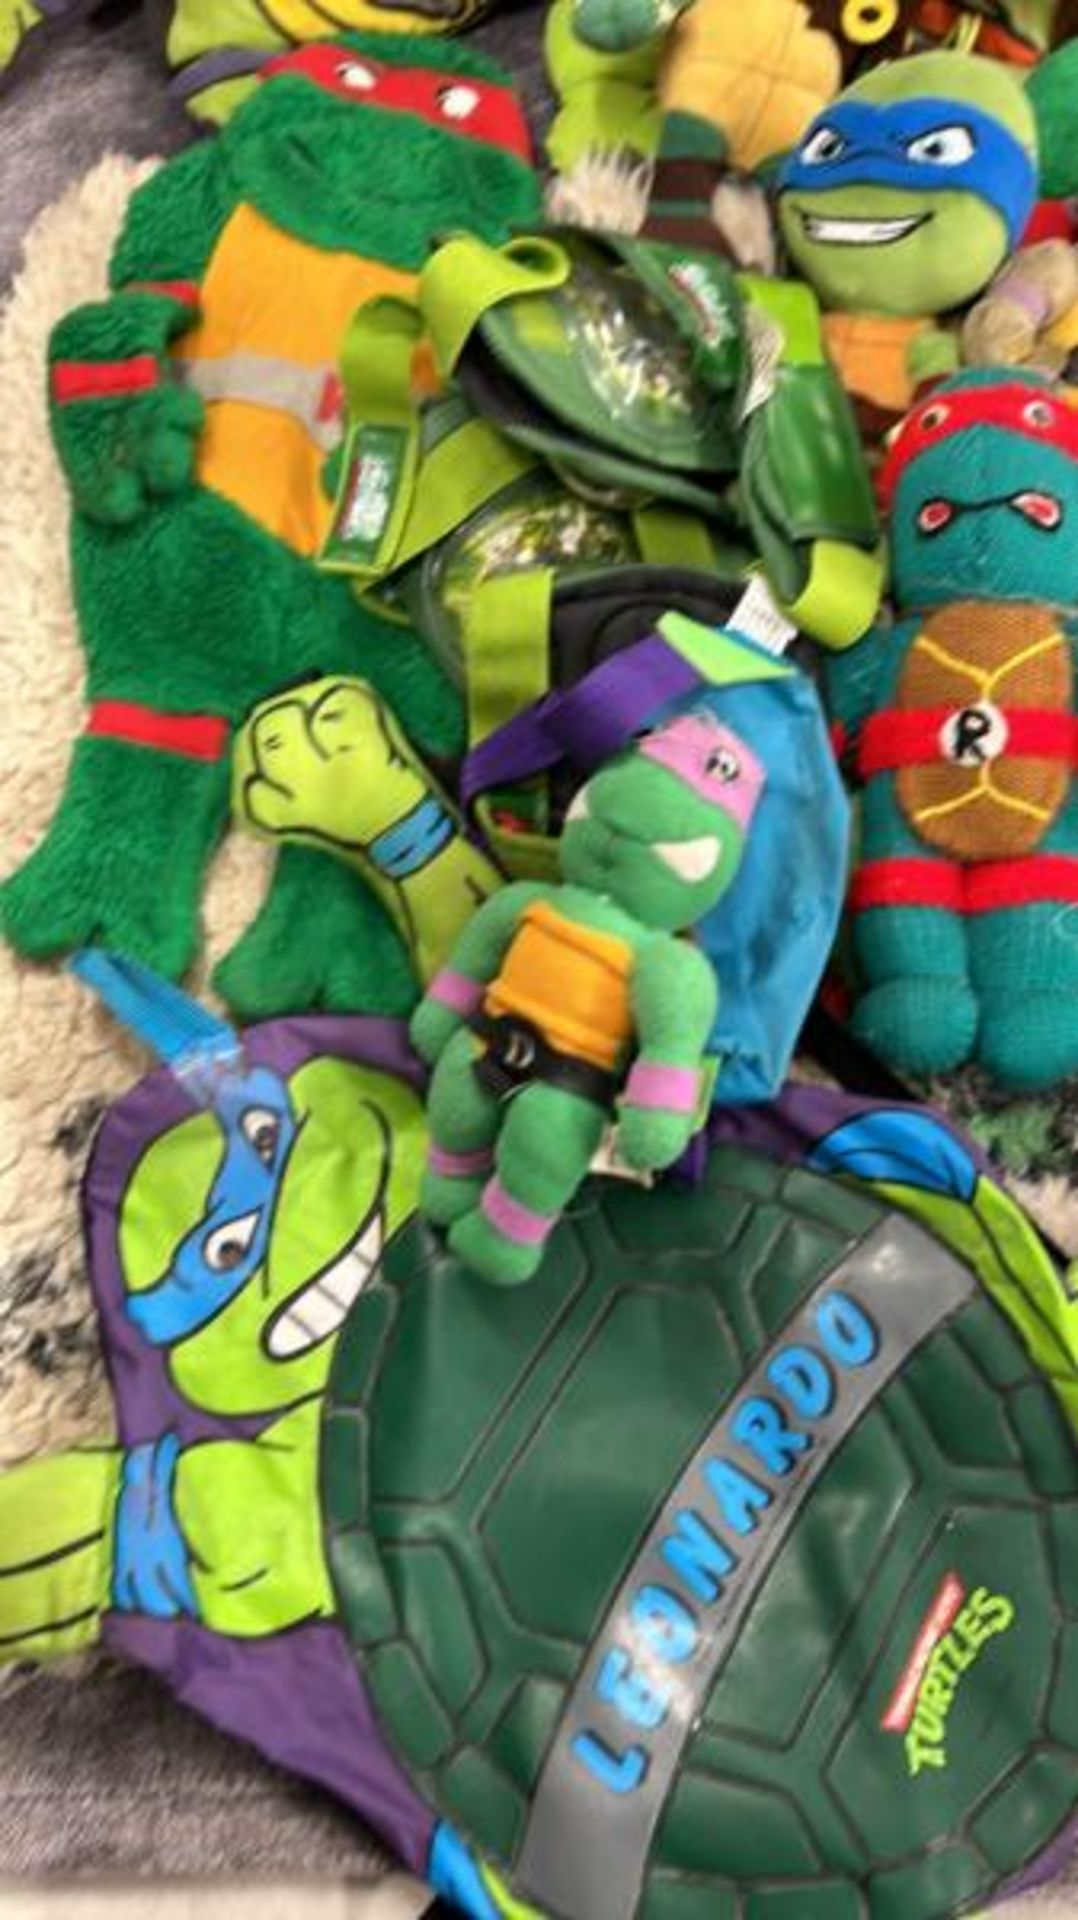 Teenage Mutant Hero Turtles soft toys, rug, rucksacks, bags and hot water bottles / AN41 - Image 6 of 8